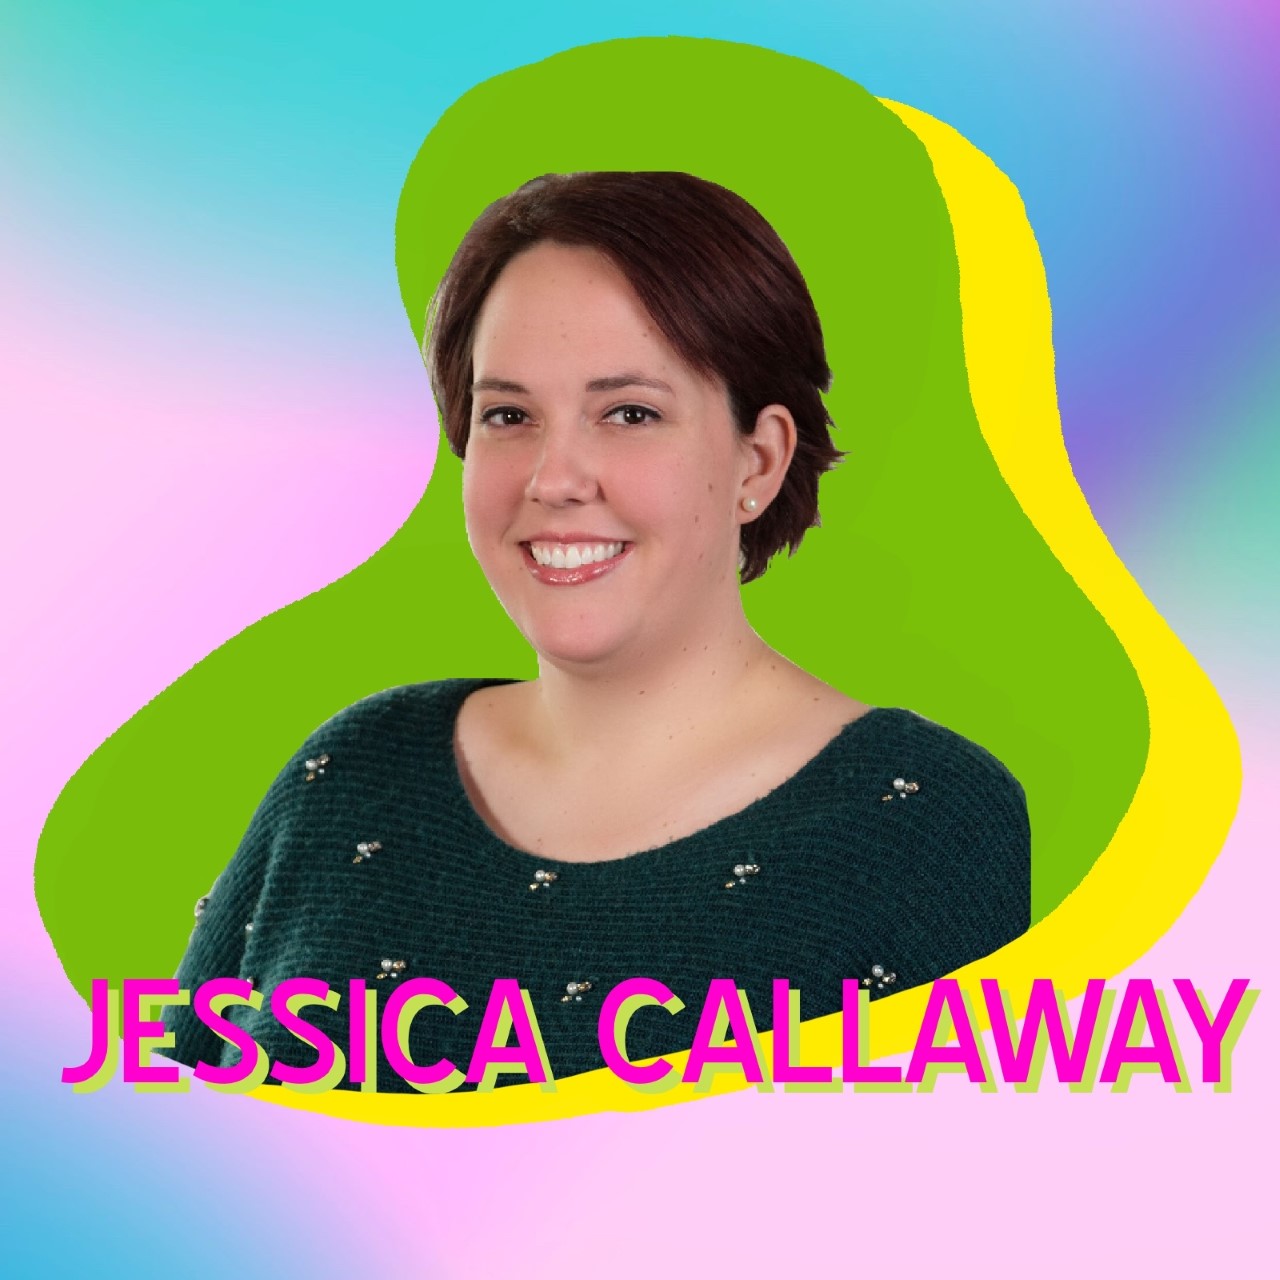 "Jessica Callaway" superimposed over her headshot